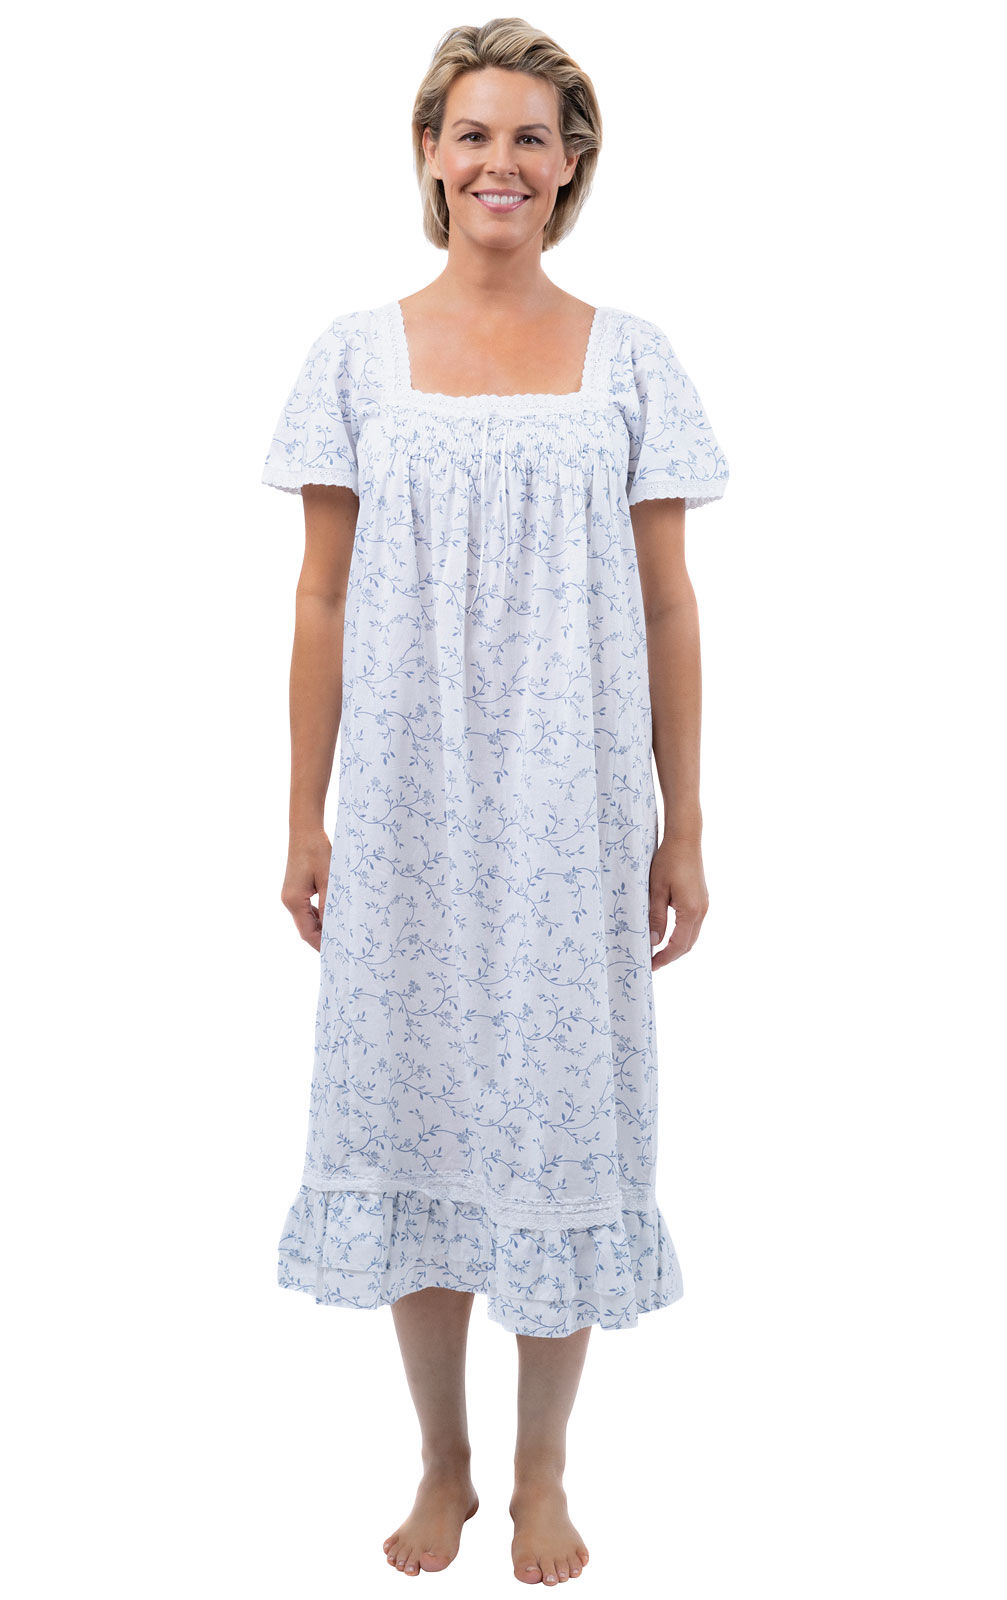 XXL The 1 for U 100% Cotton Ladies Victorian Style Nightgown 7 Sizes Kate